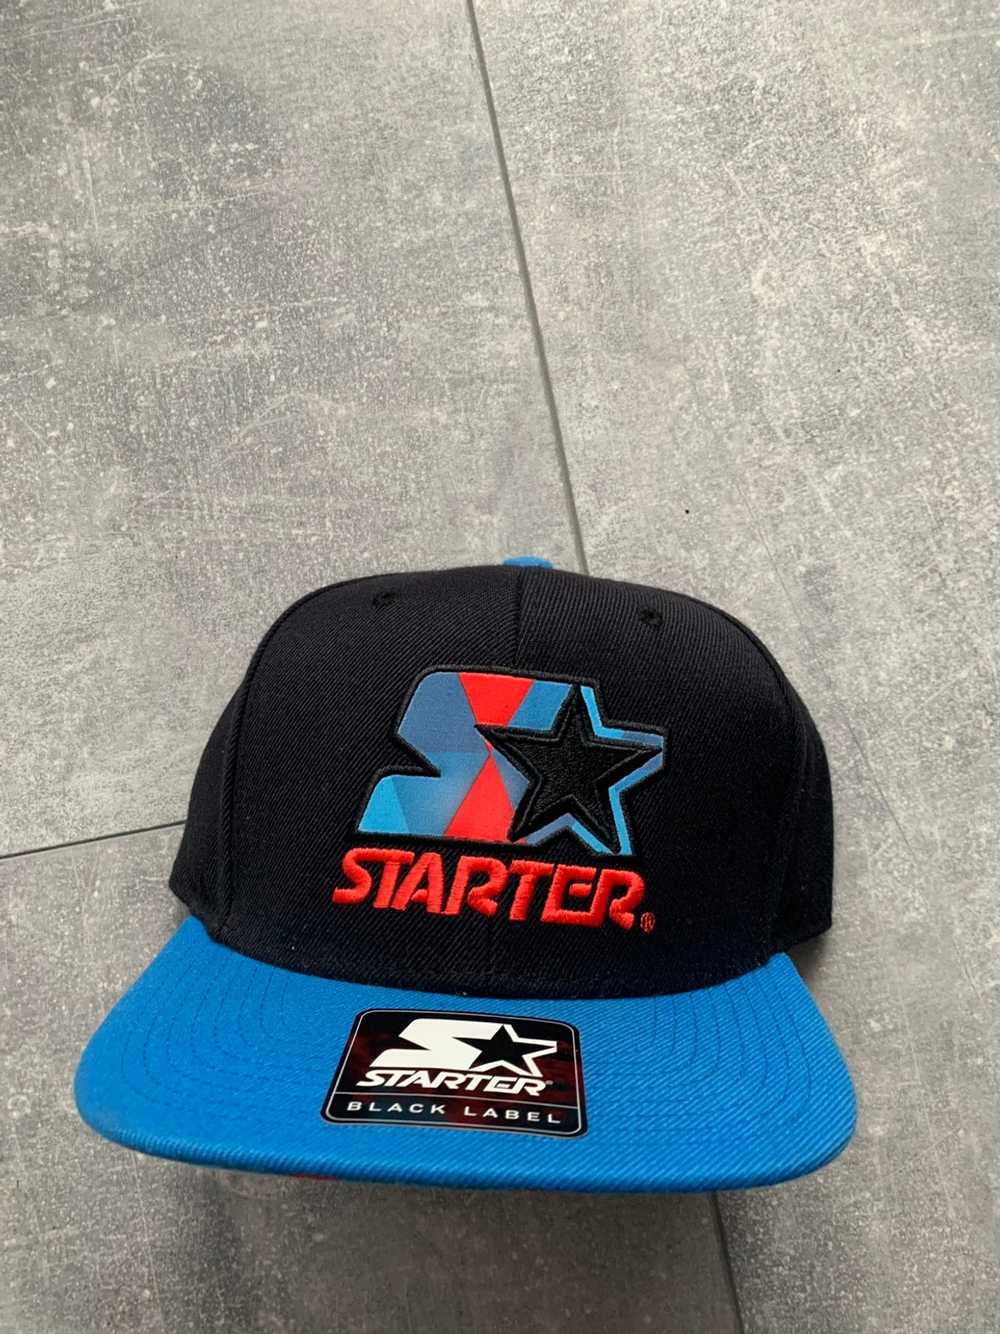 new Starter Starter cap Black label Gem -